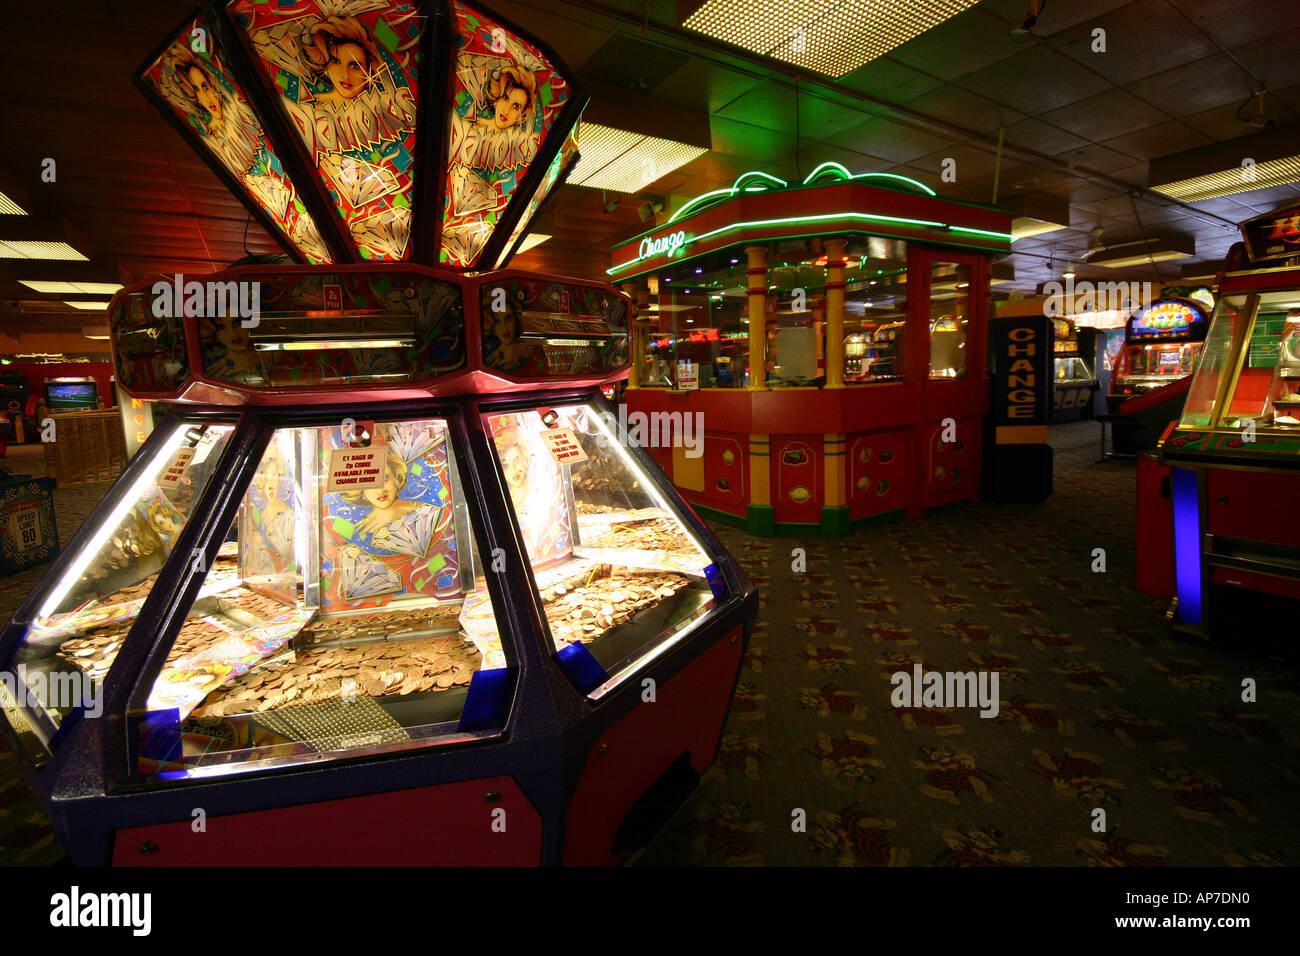 Amusement arcade with coin cascade machine Stock Photo - Alamy